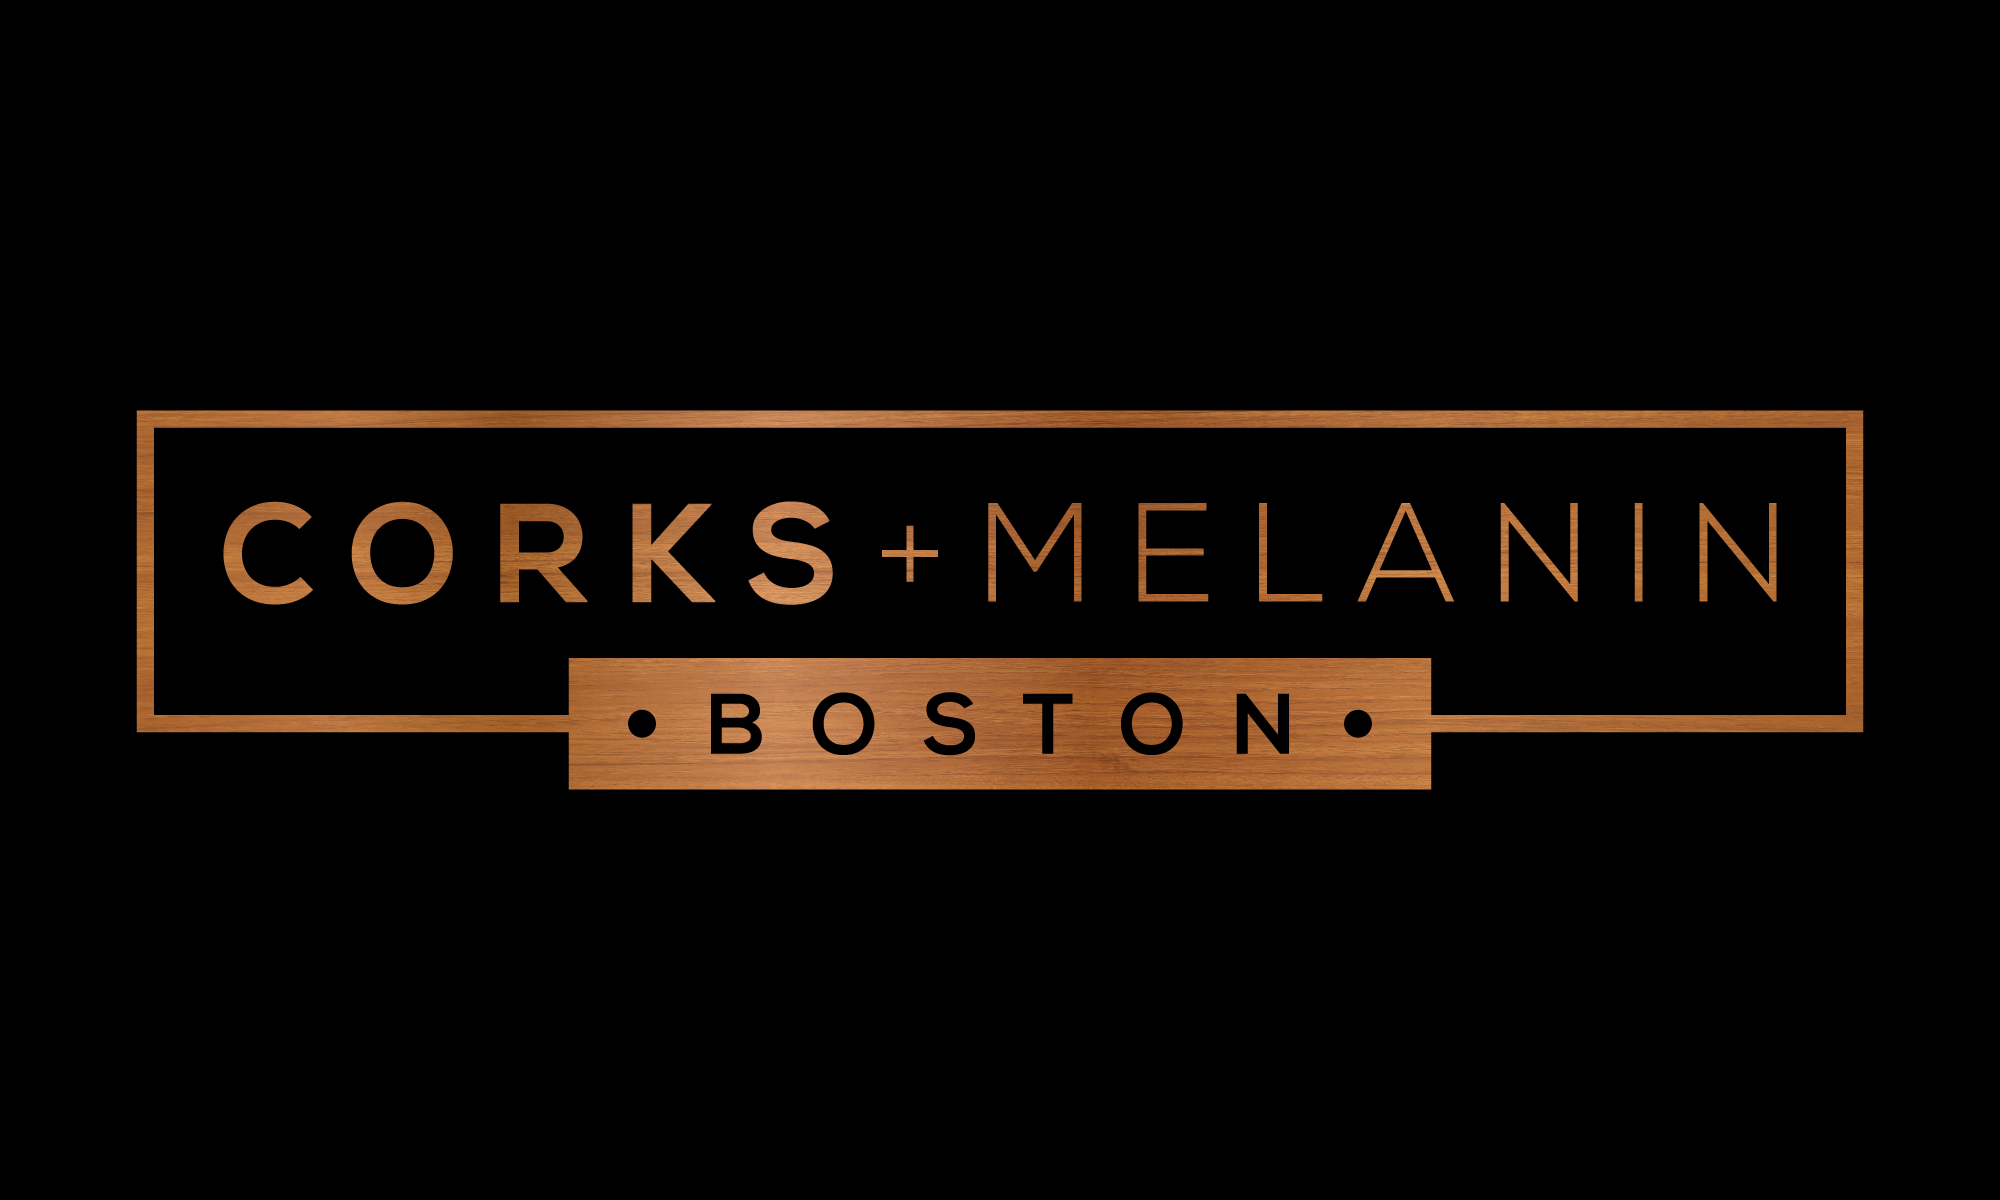 Corks + Melanin Boston